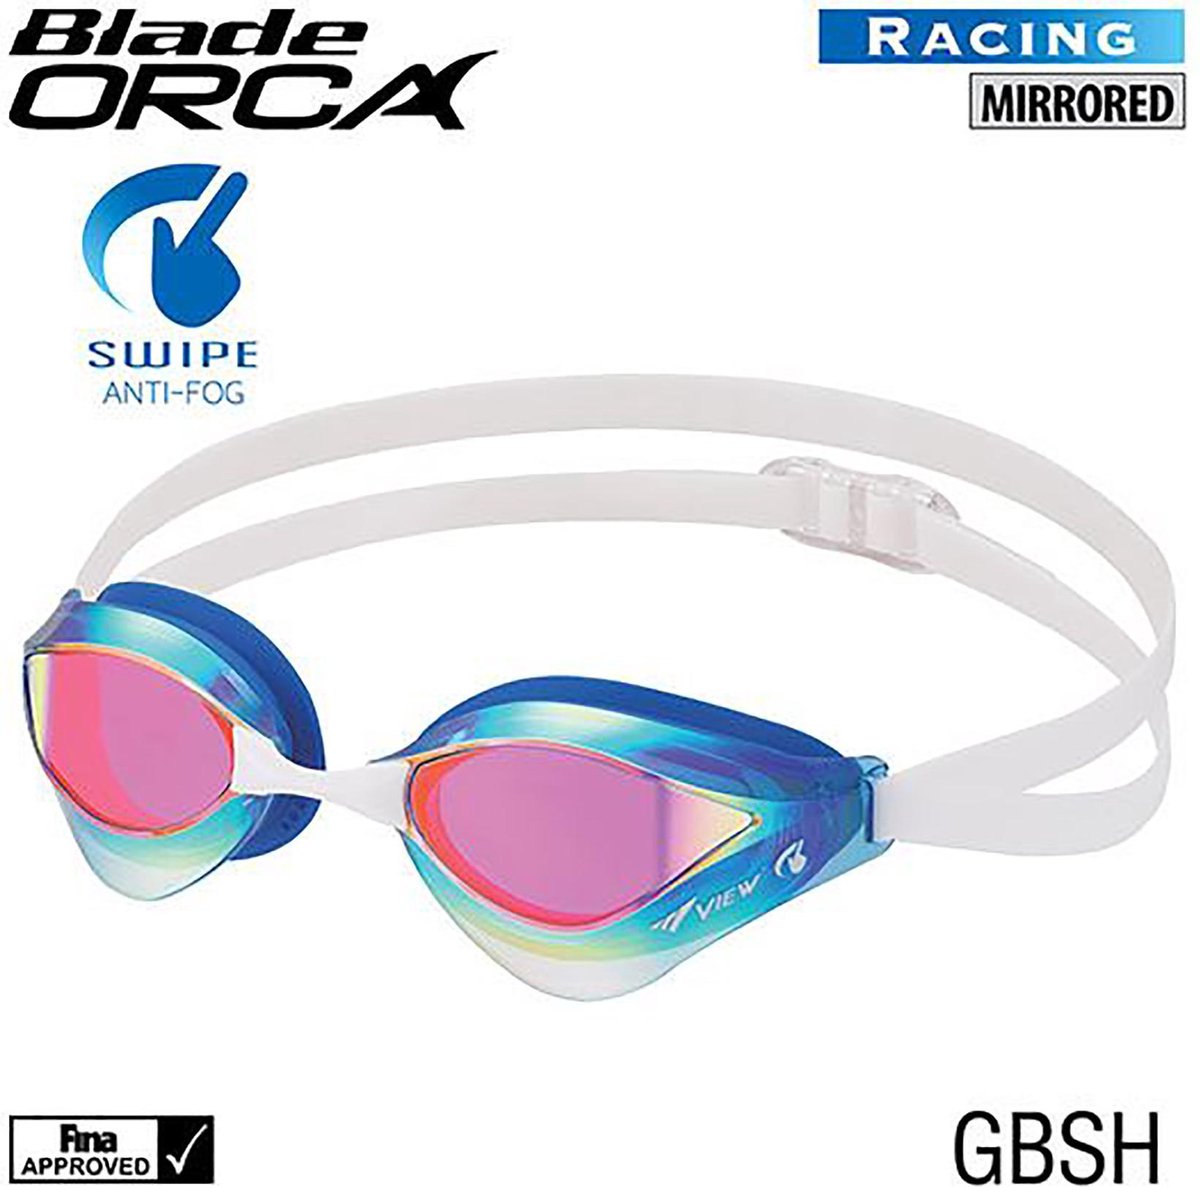 VIEW Blade Orca Racing Mirrored zwembril met SWIPE technologie V230ASA-GBSH